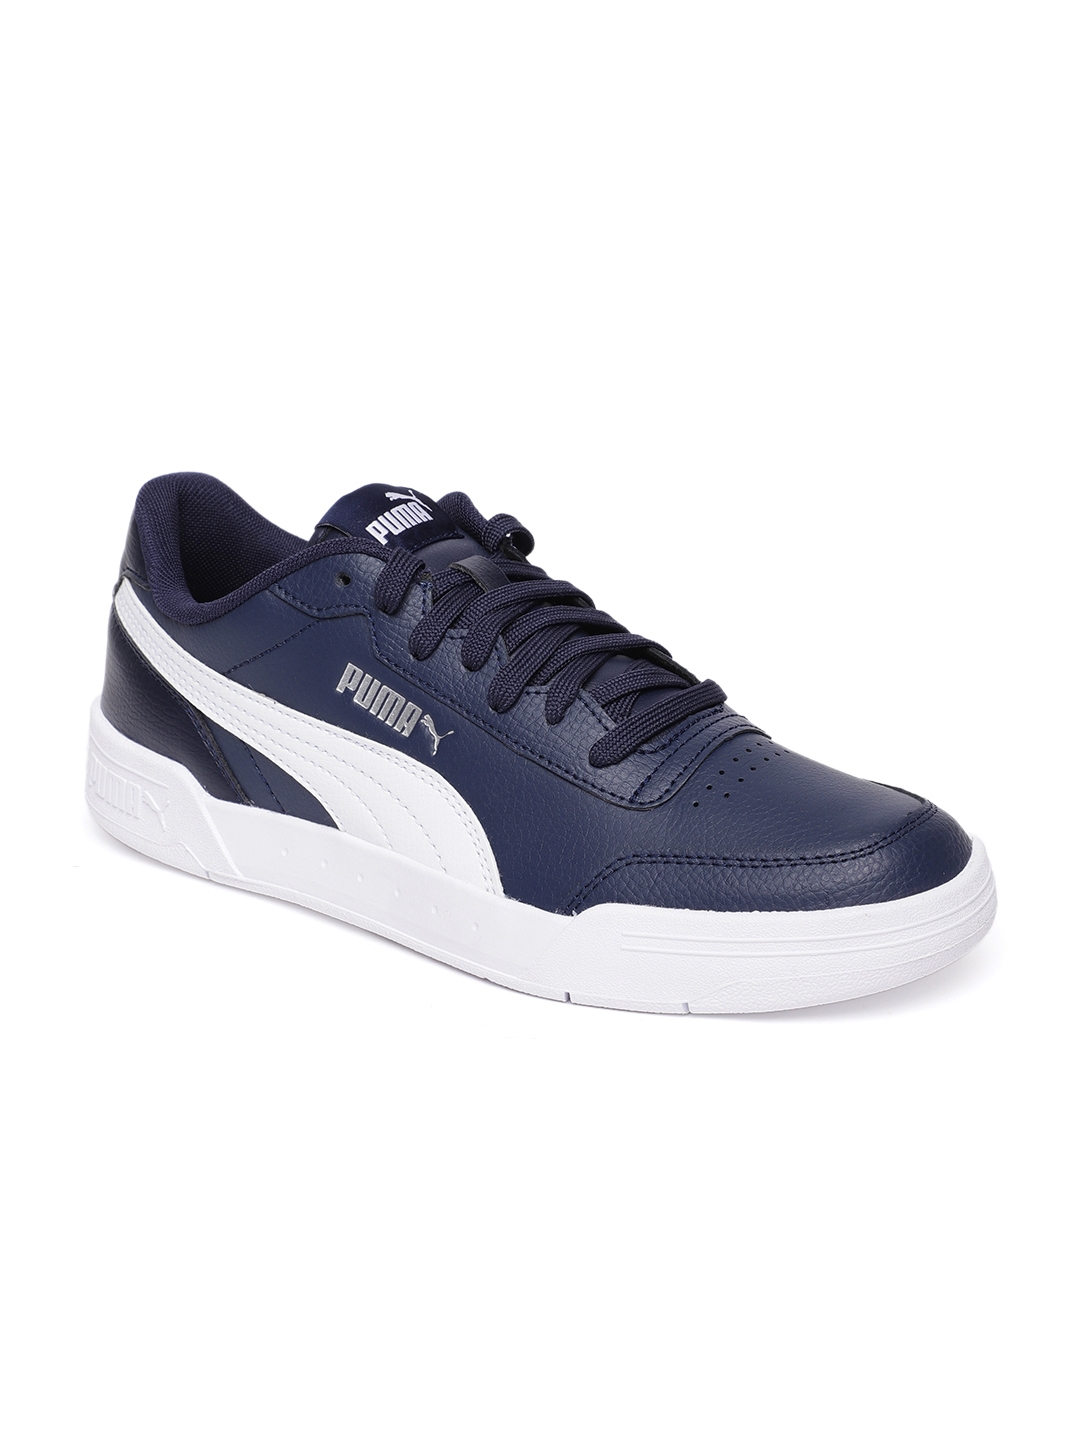 puma navy blue sneakers